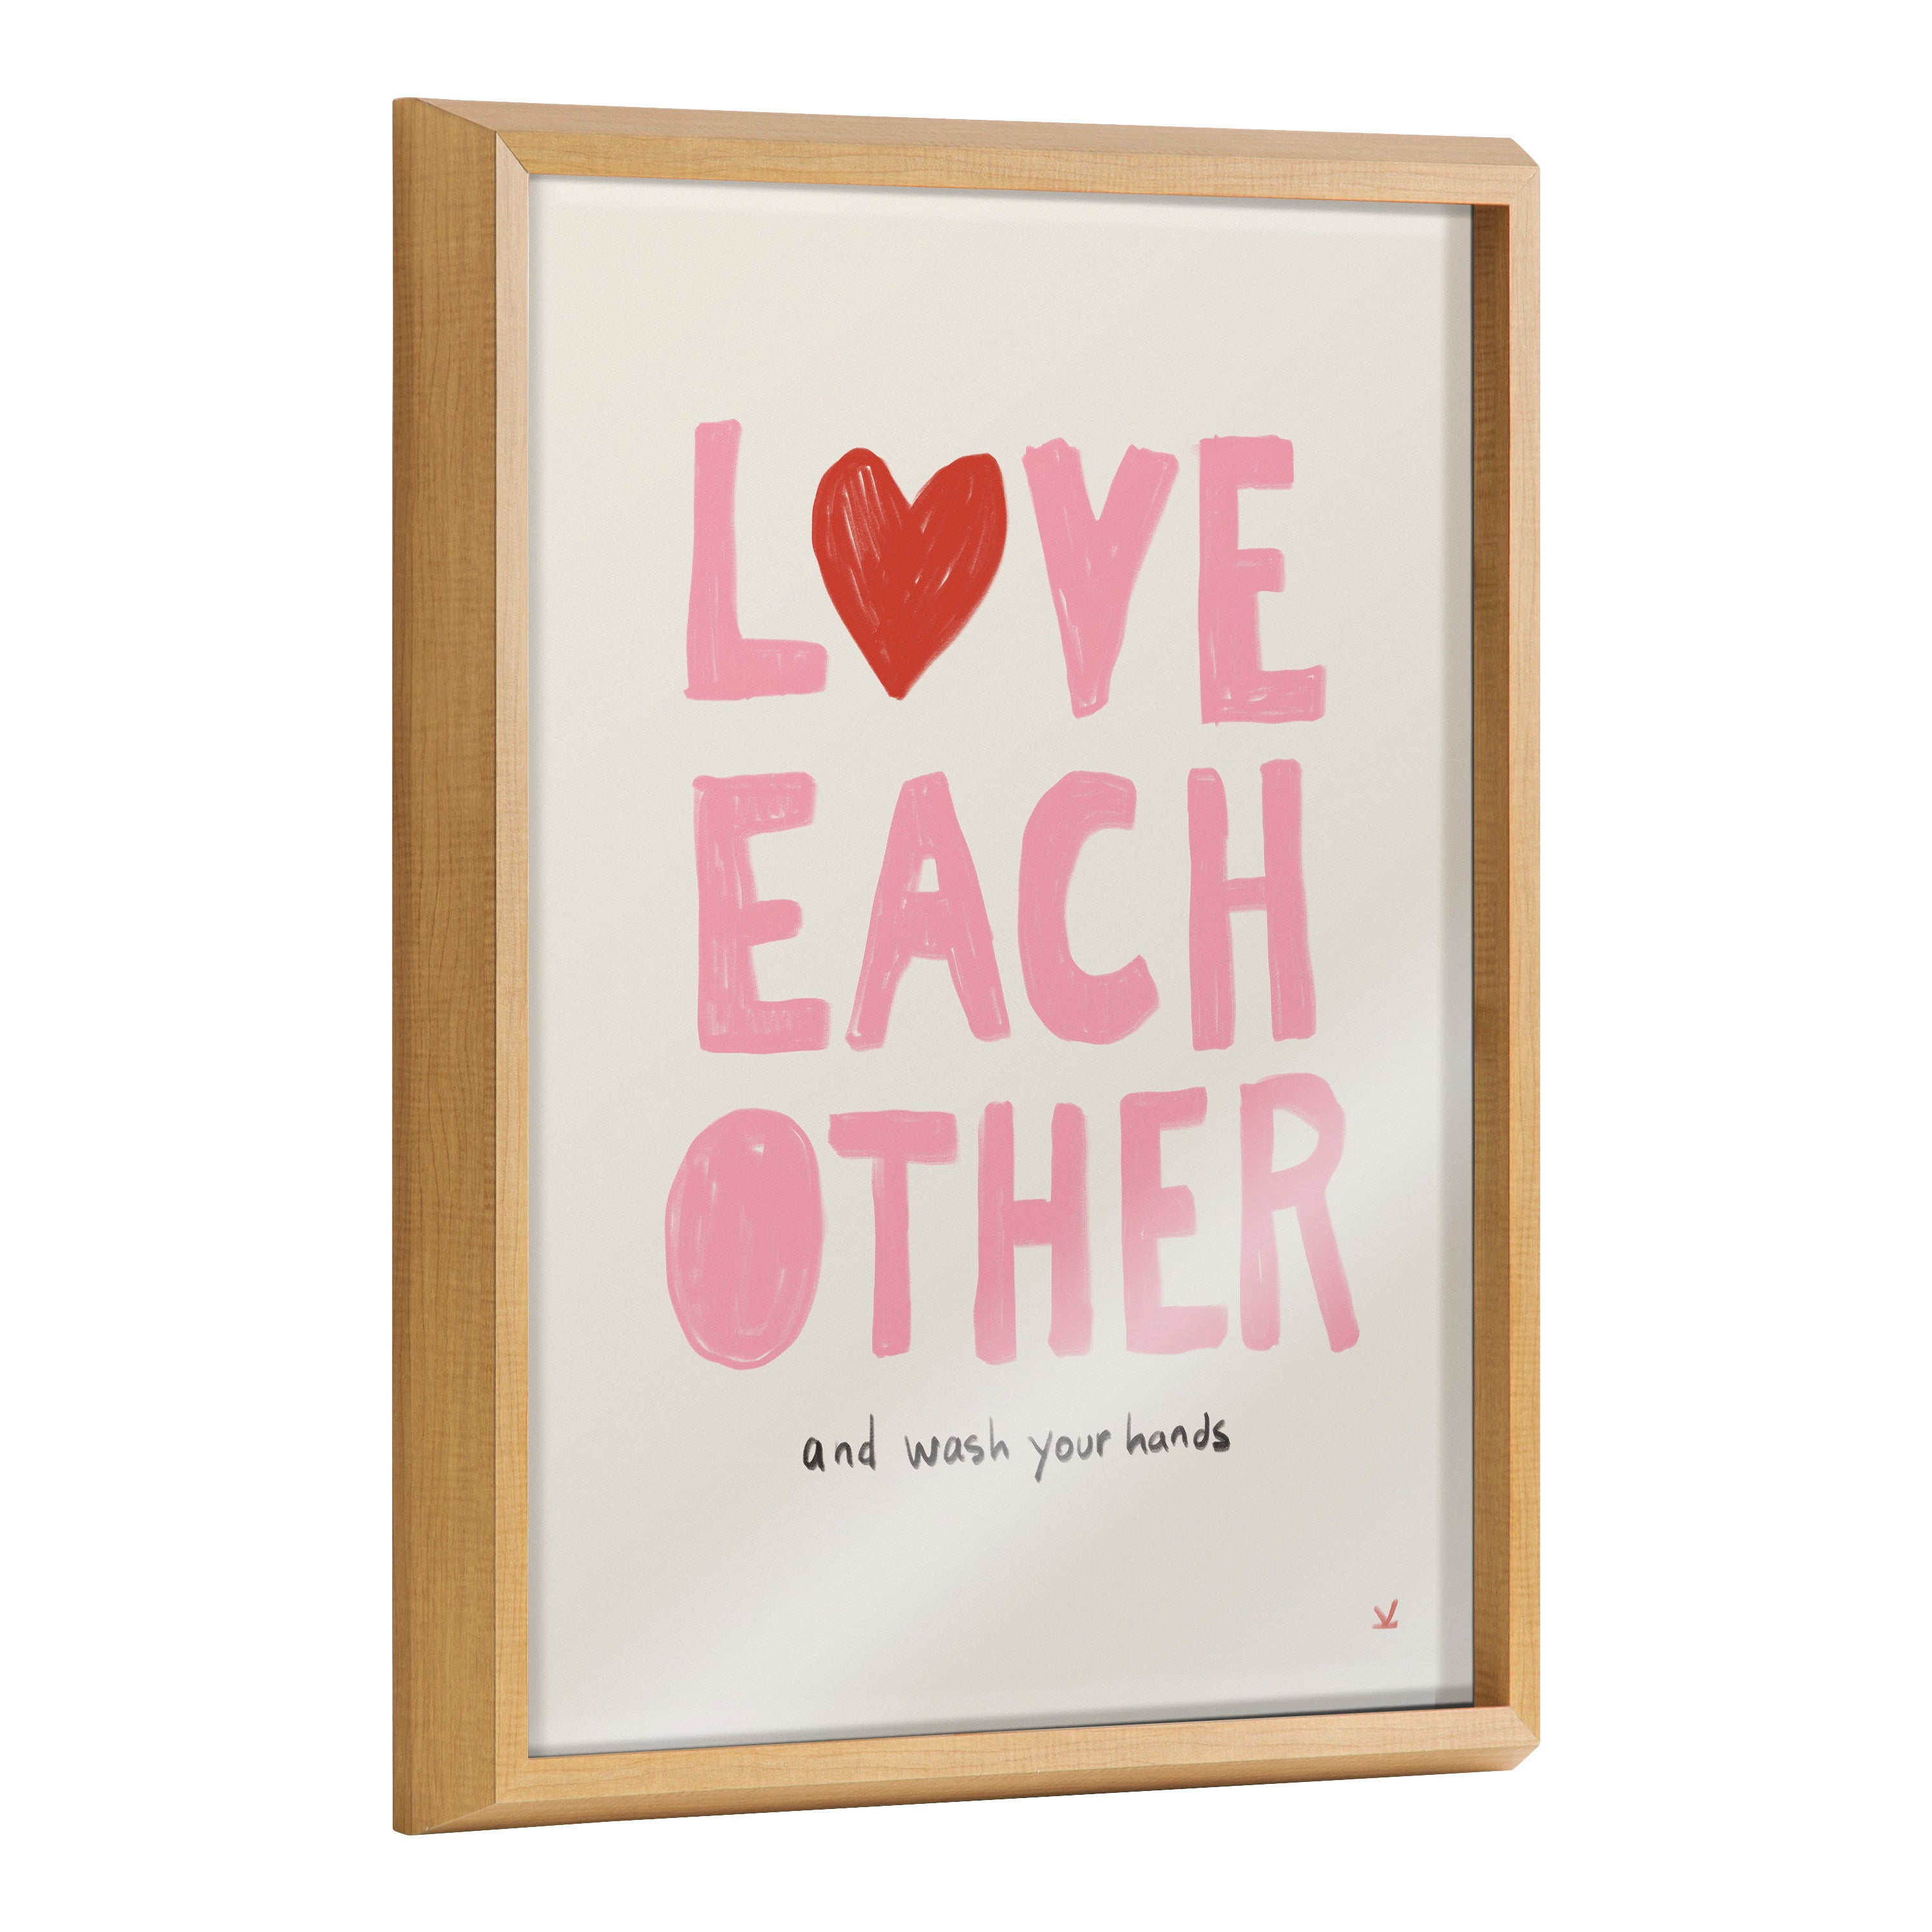 Blake Love Each Other Framed Printed Glass by Kelly Knaga